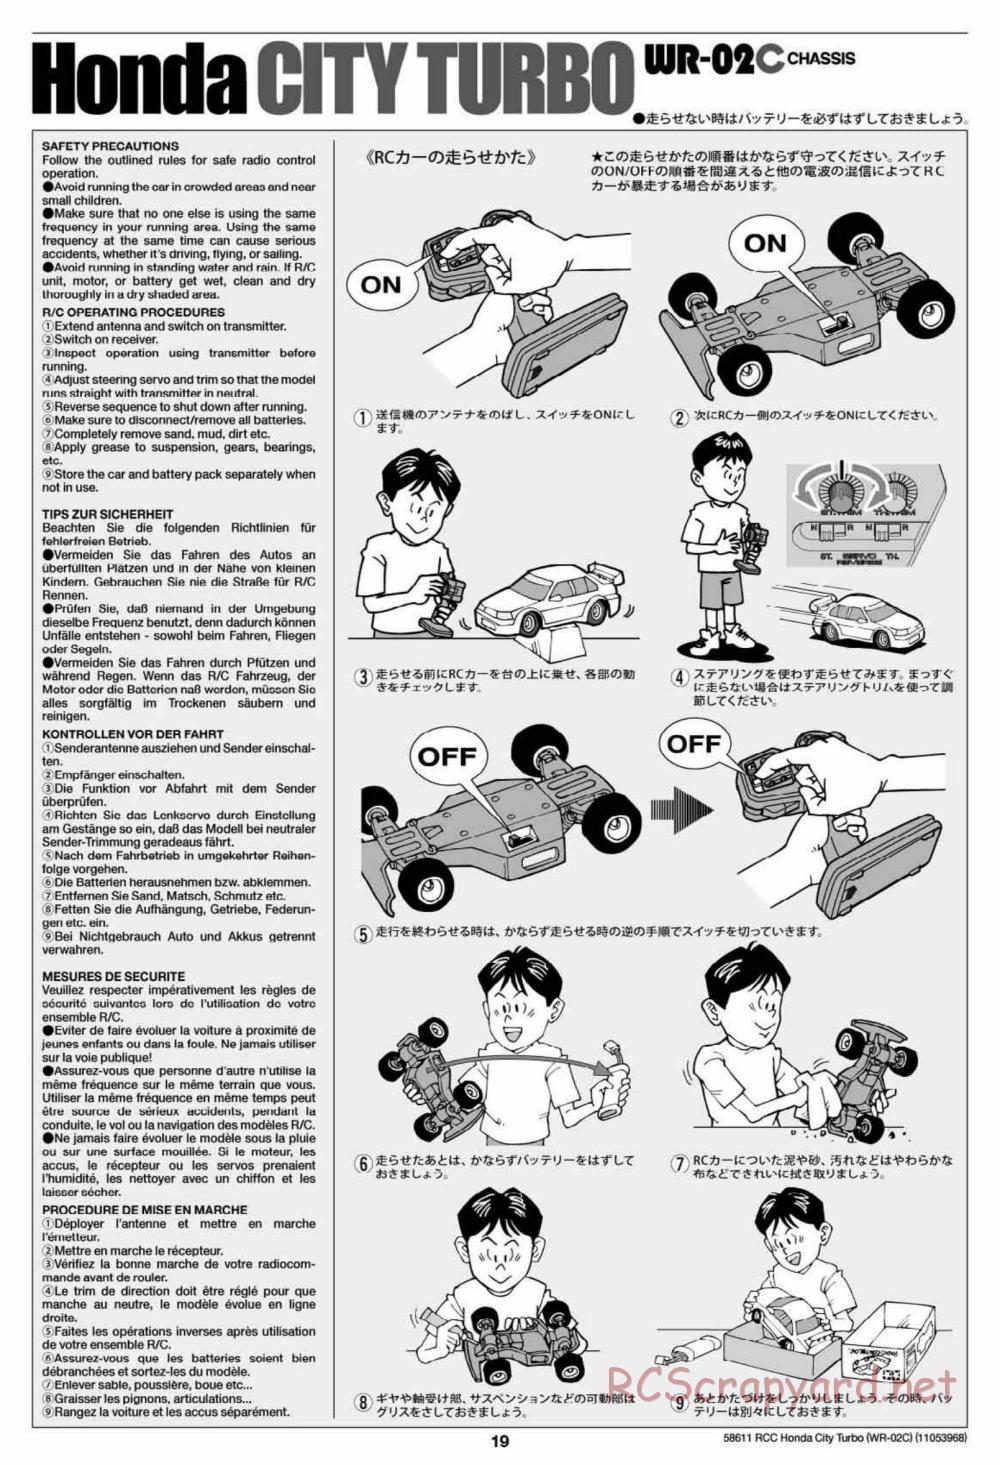 Tamiya - WR-02C Chassis - Manual - Page 19